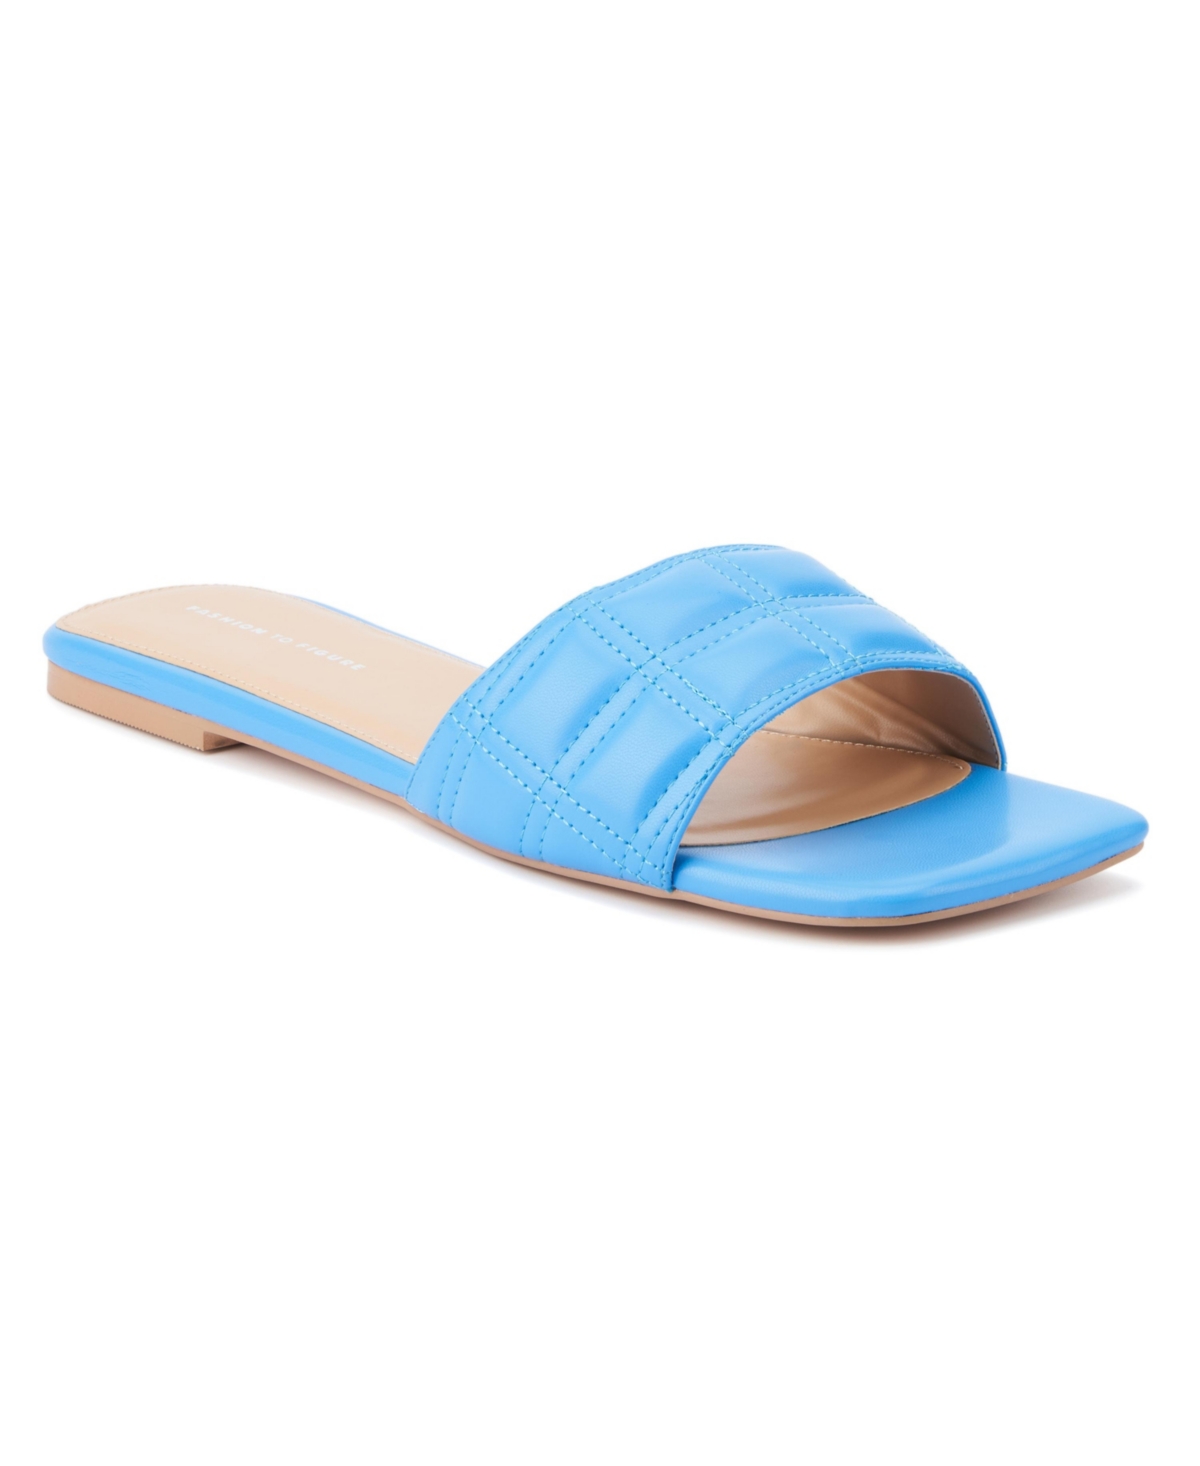 Women's Opal Wide Width Flats Sandals - Blue